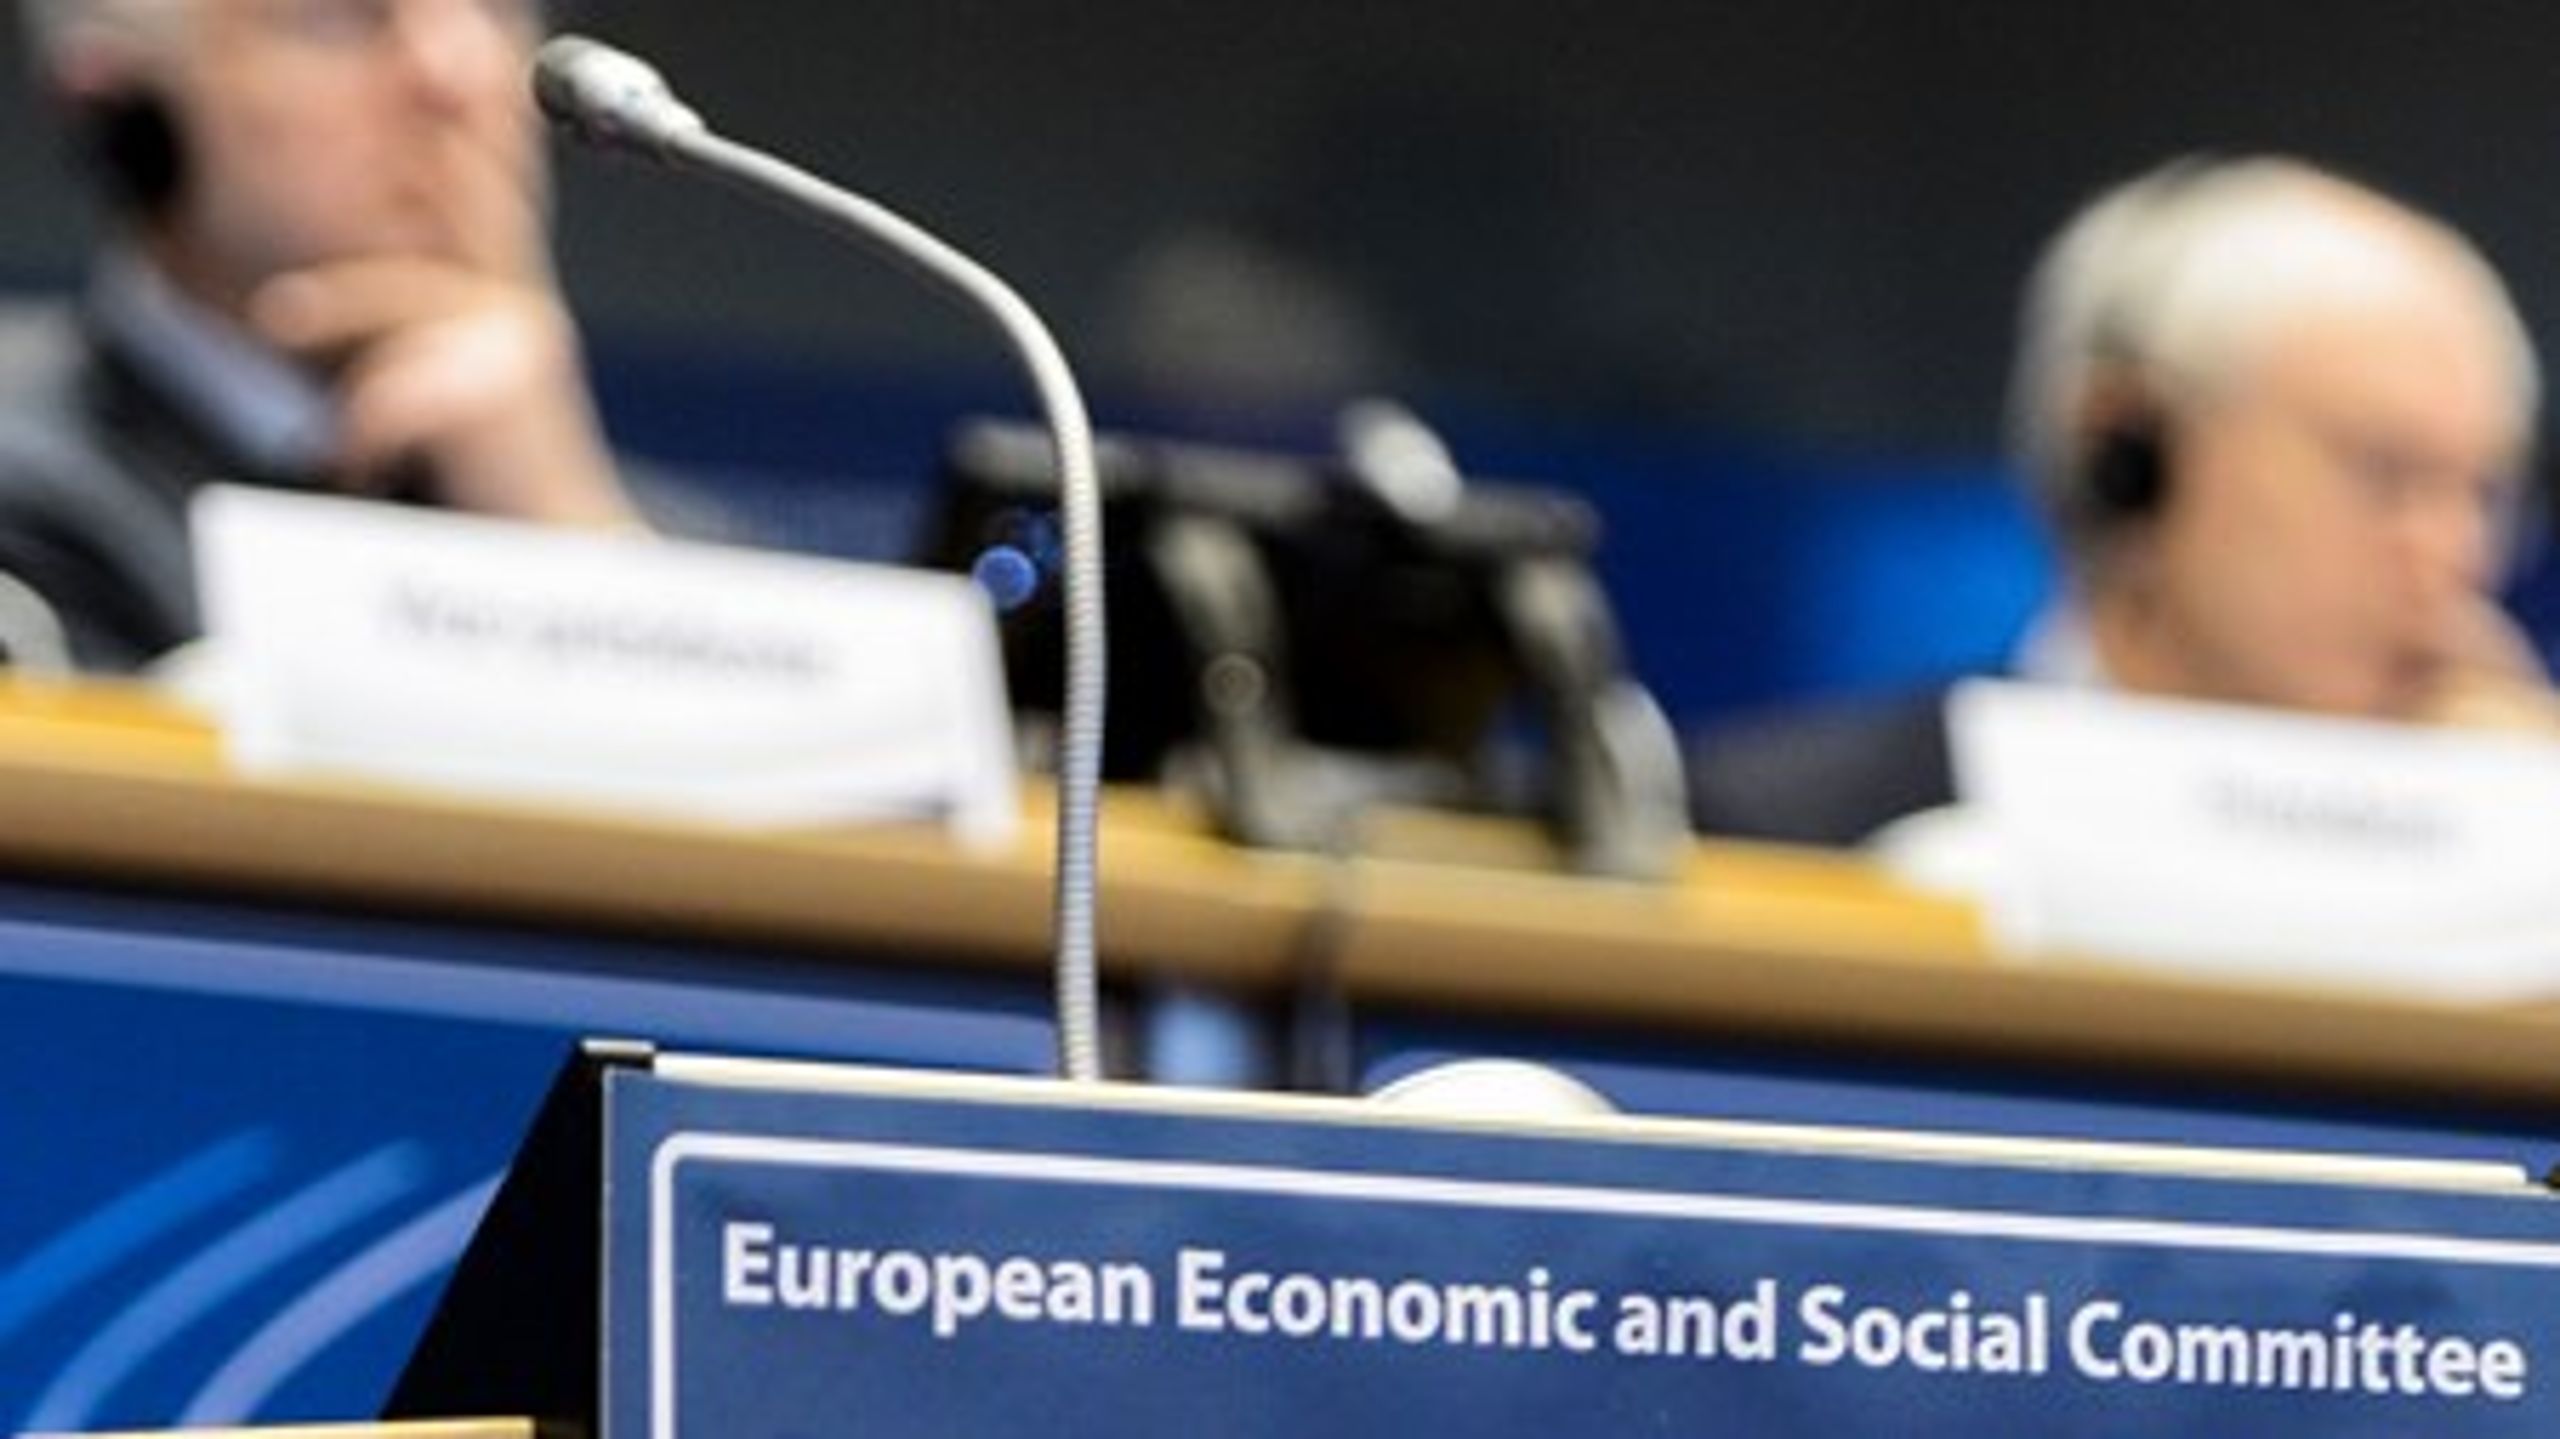 Danmark har ni pladser i&nbsp;EU's Sociale og Økonomiske Udvalg.